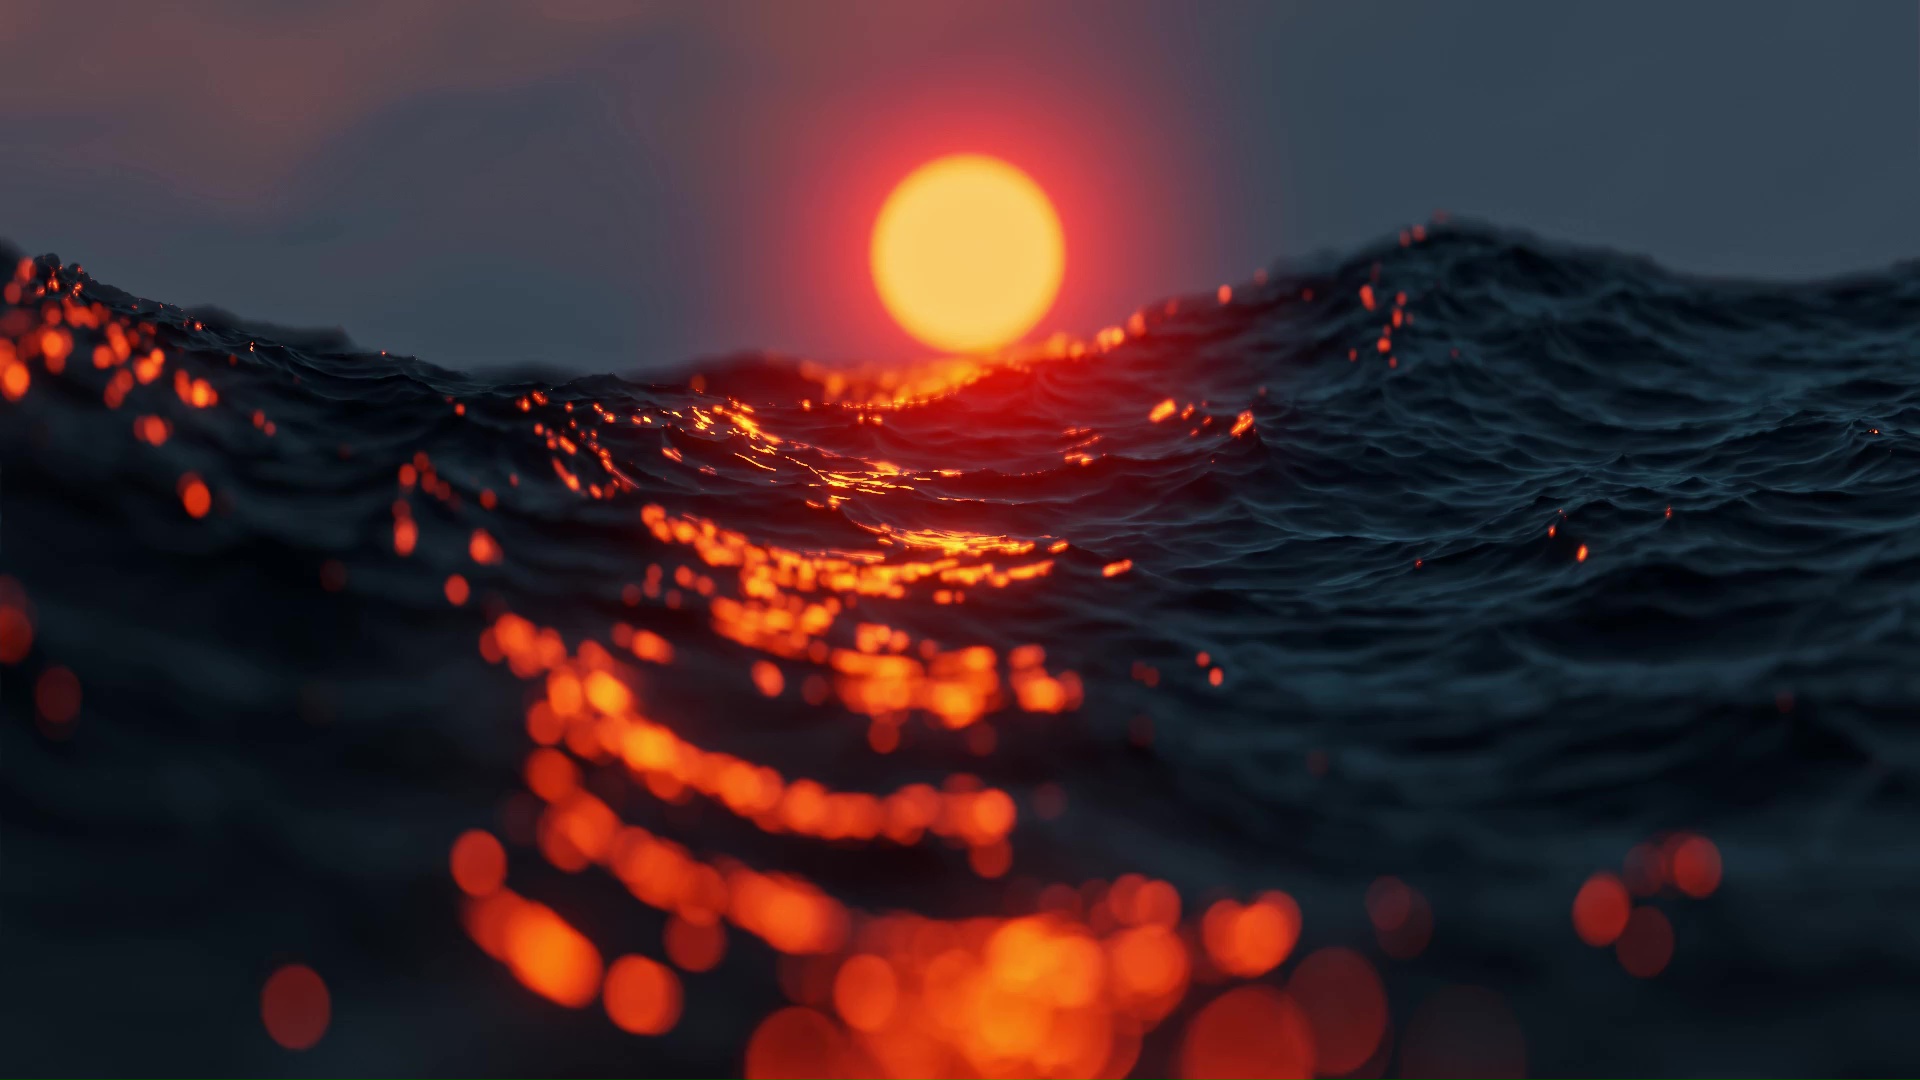 Sunset through the ocean Wallpaper Download  MobCup